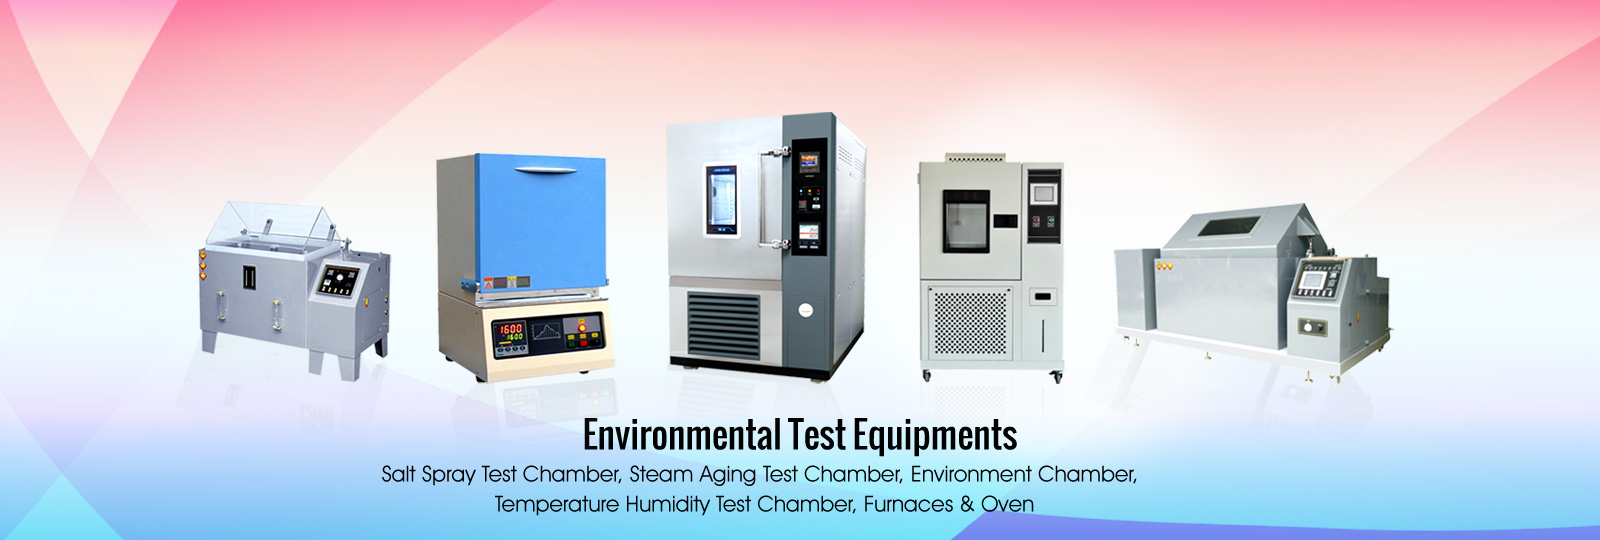 Environmental Test Equipments